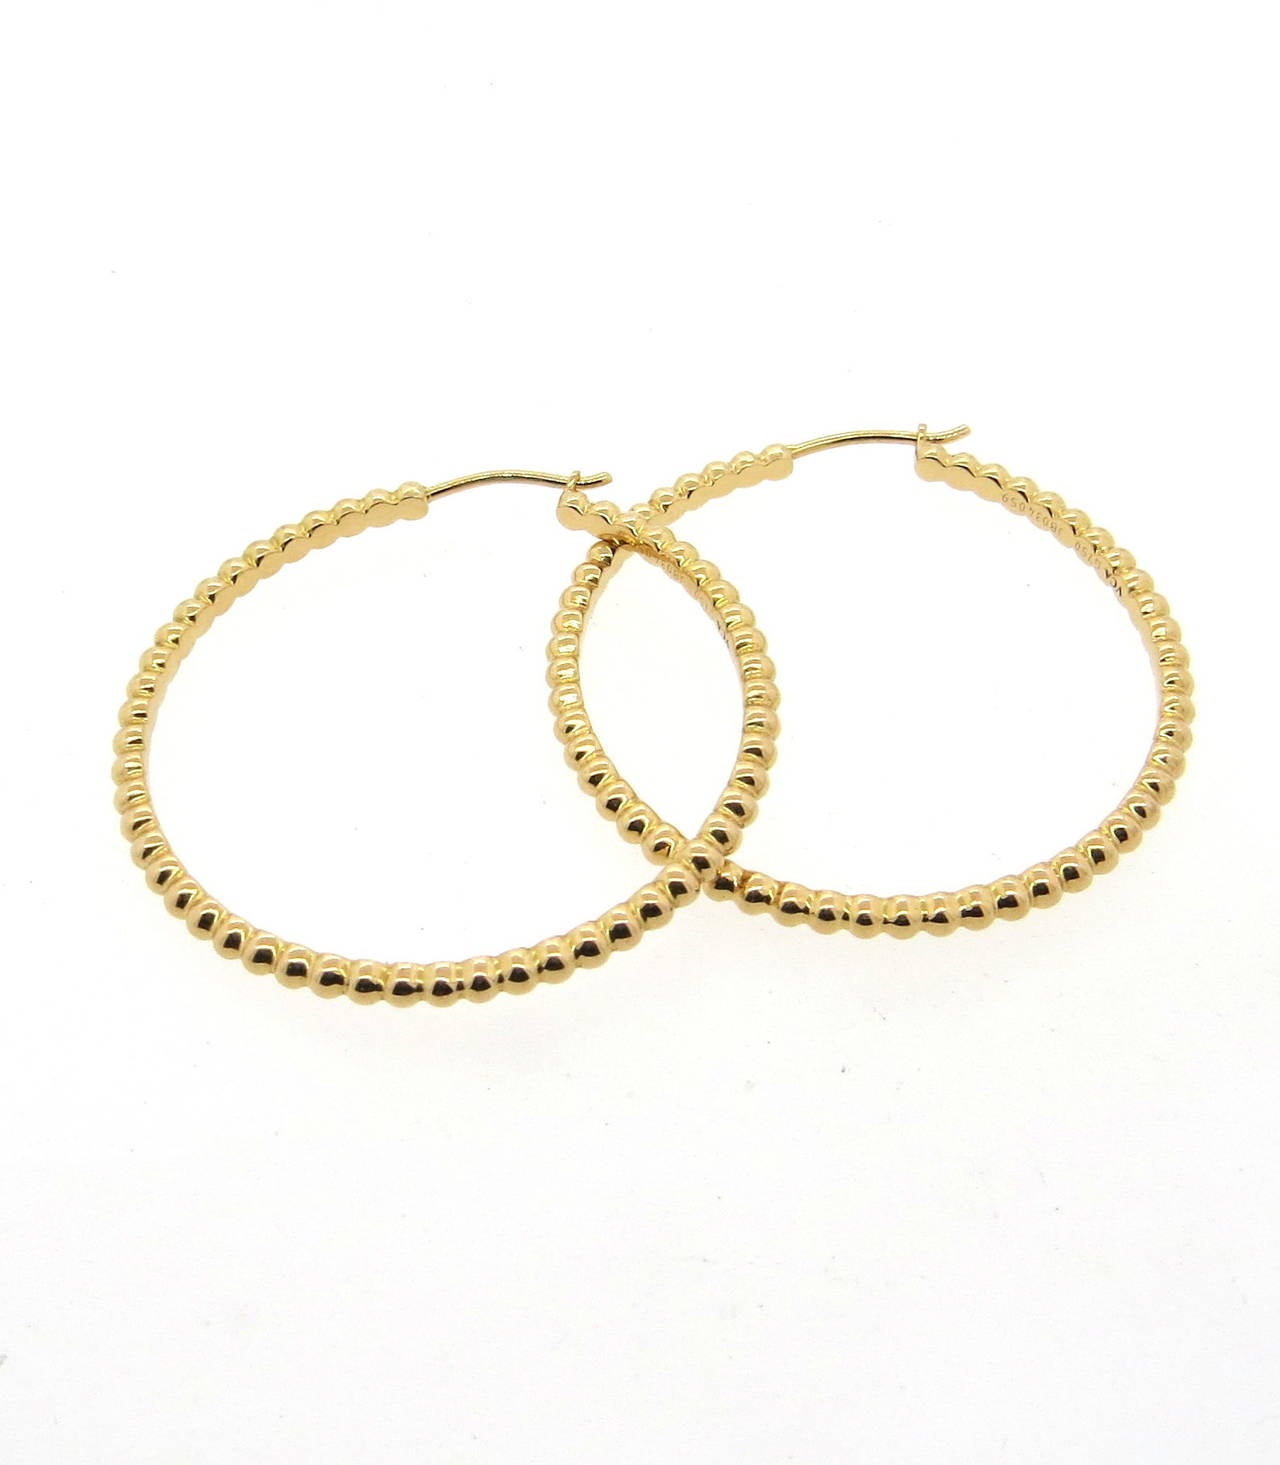 Remarkable 18K gold beaded hoop earrings from Van Cleef & Arpels from the Perlee collection. Earrings measure 40mm in diameter, 2.7mm wide. Earrings are marked VCA, G750, JB034059. Weigh 15.2 grams. Earrings retail for $2,800.